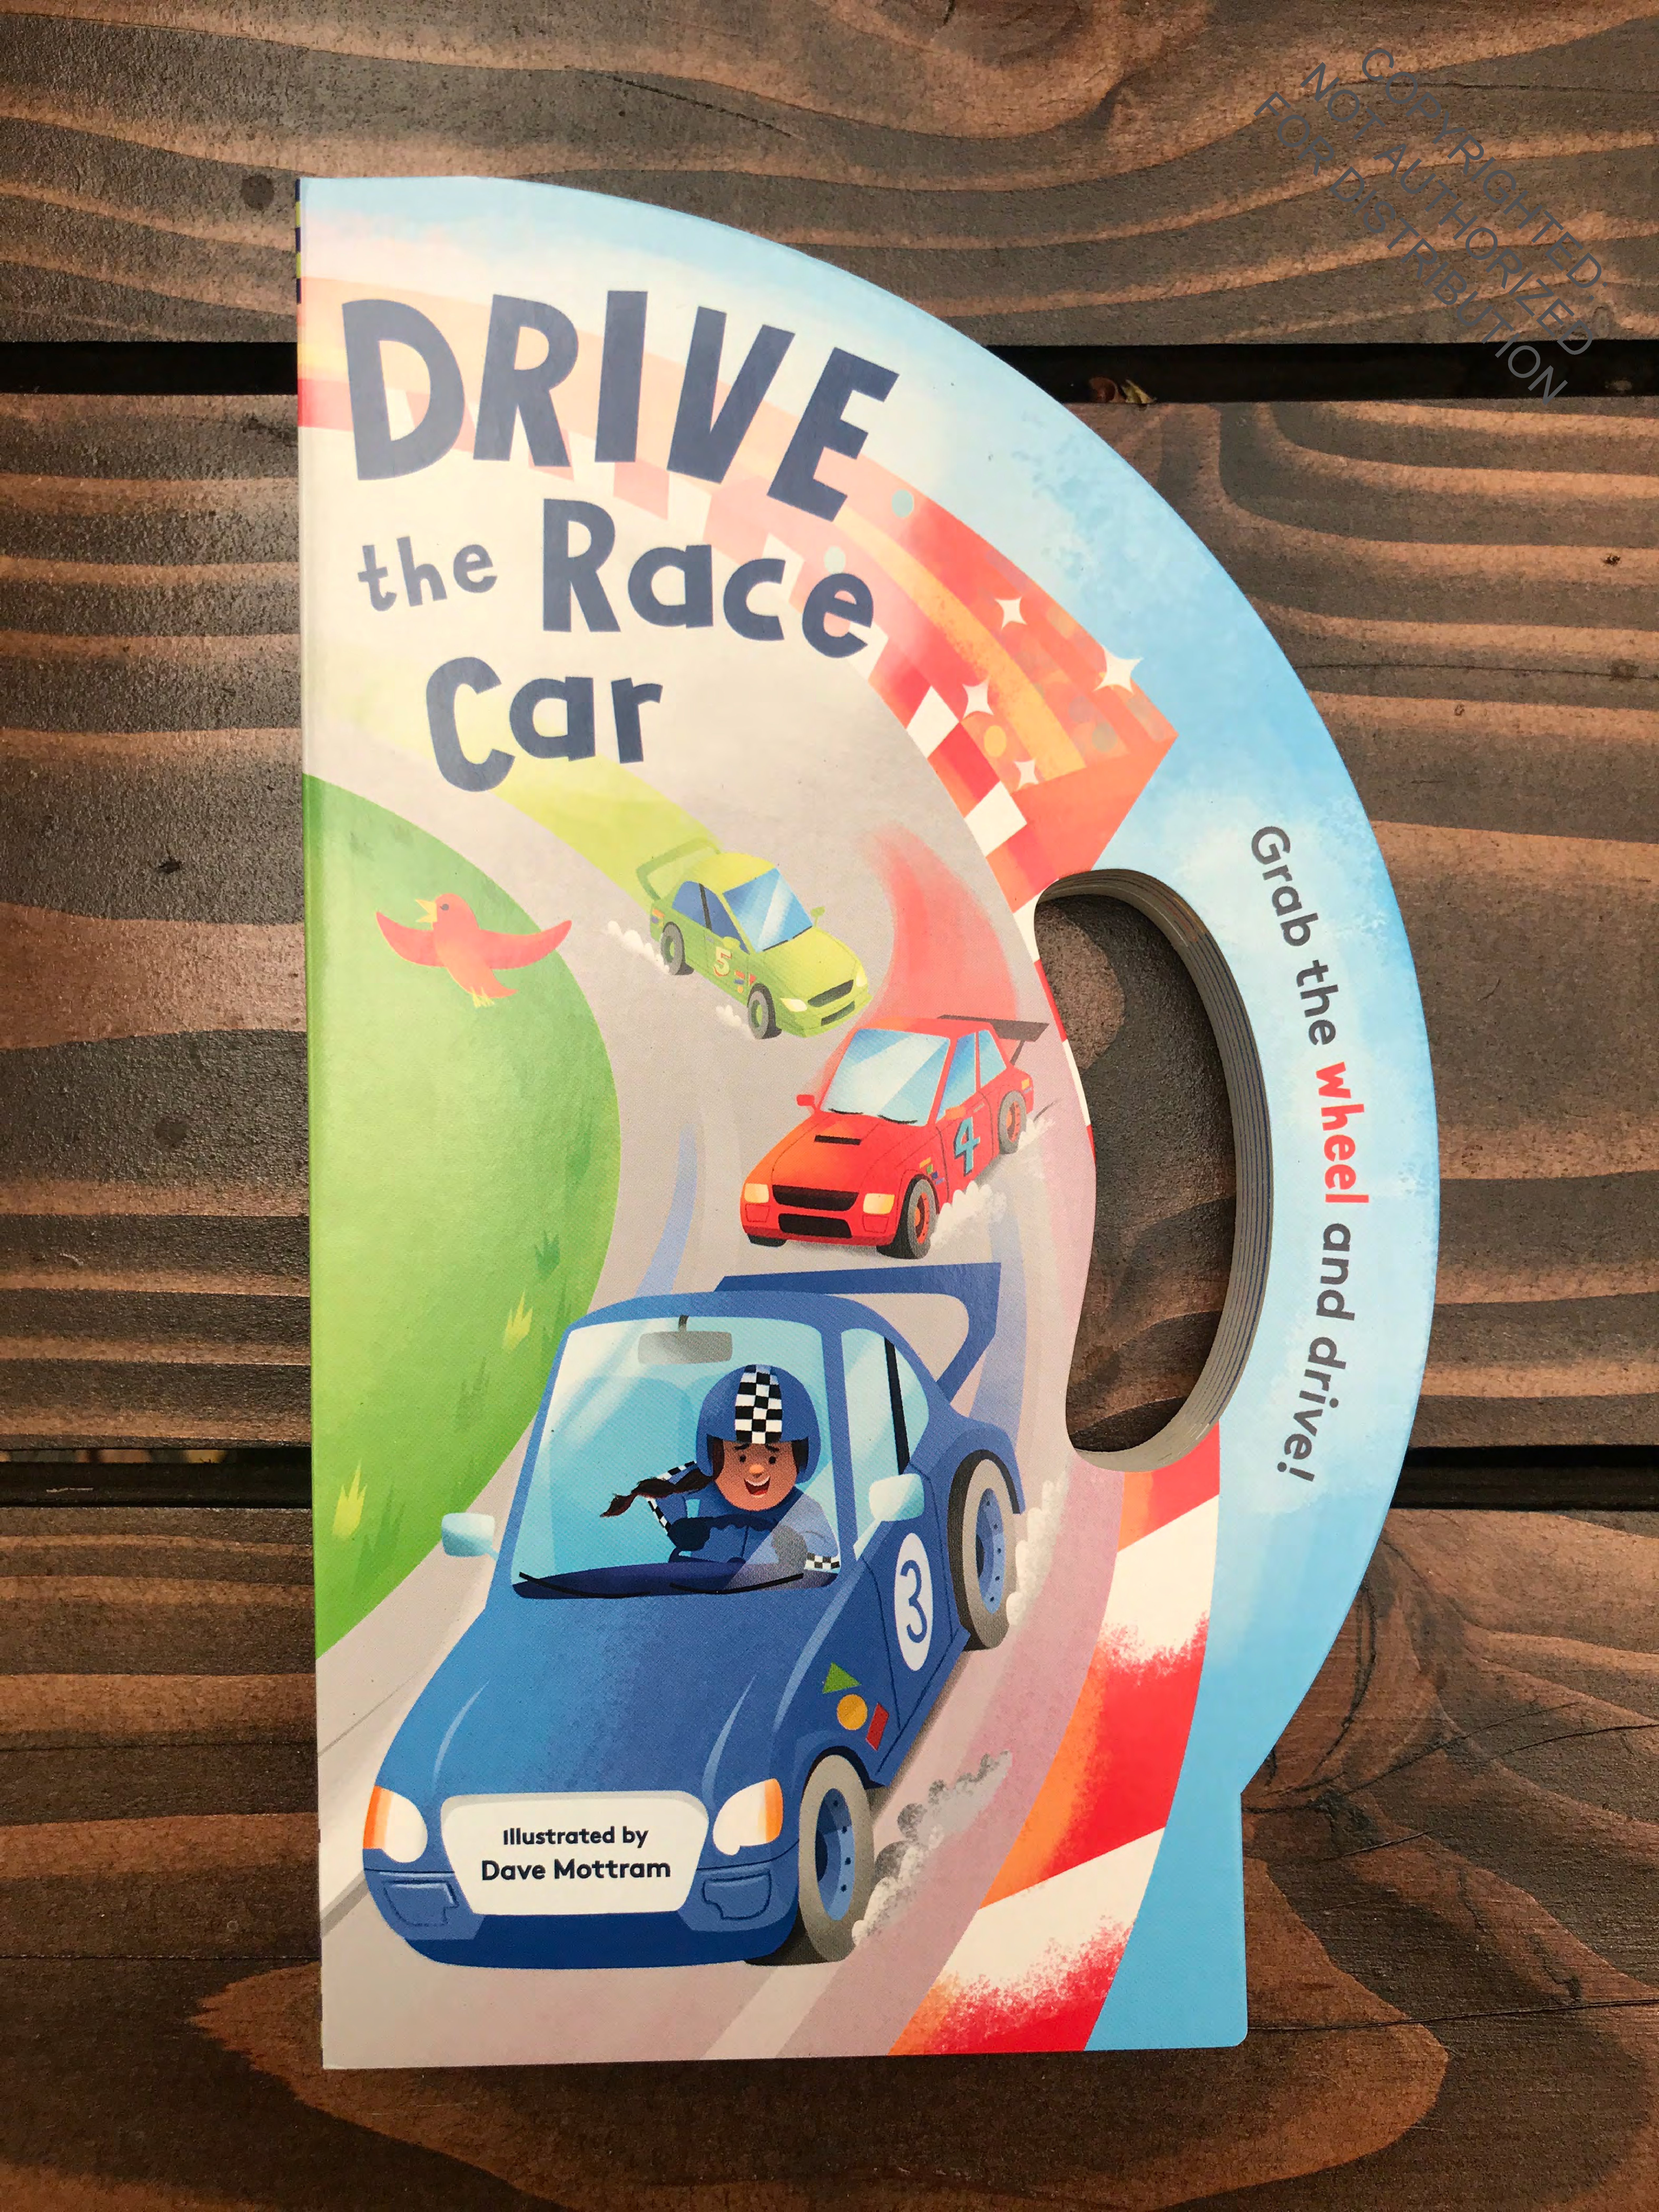 Drive the Race Car